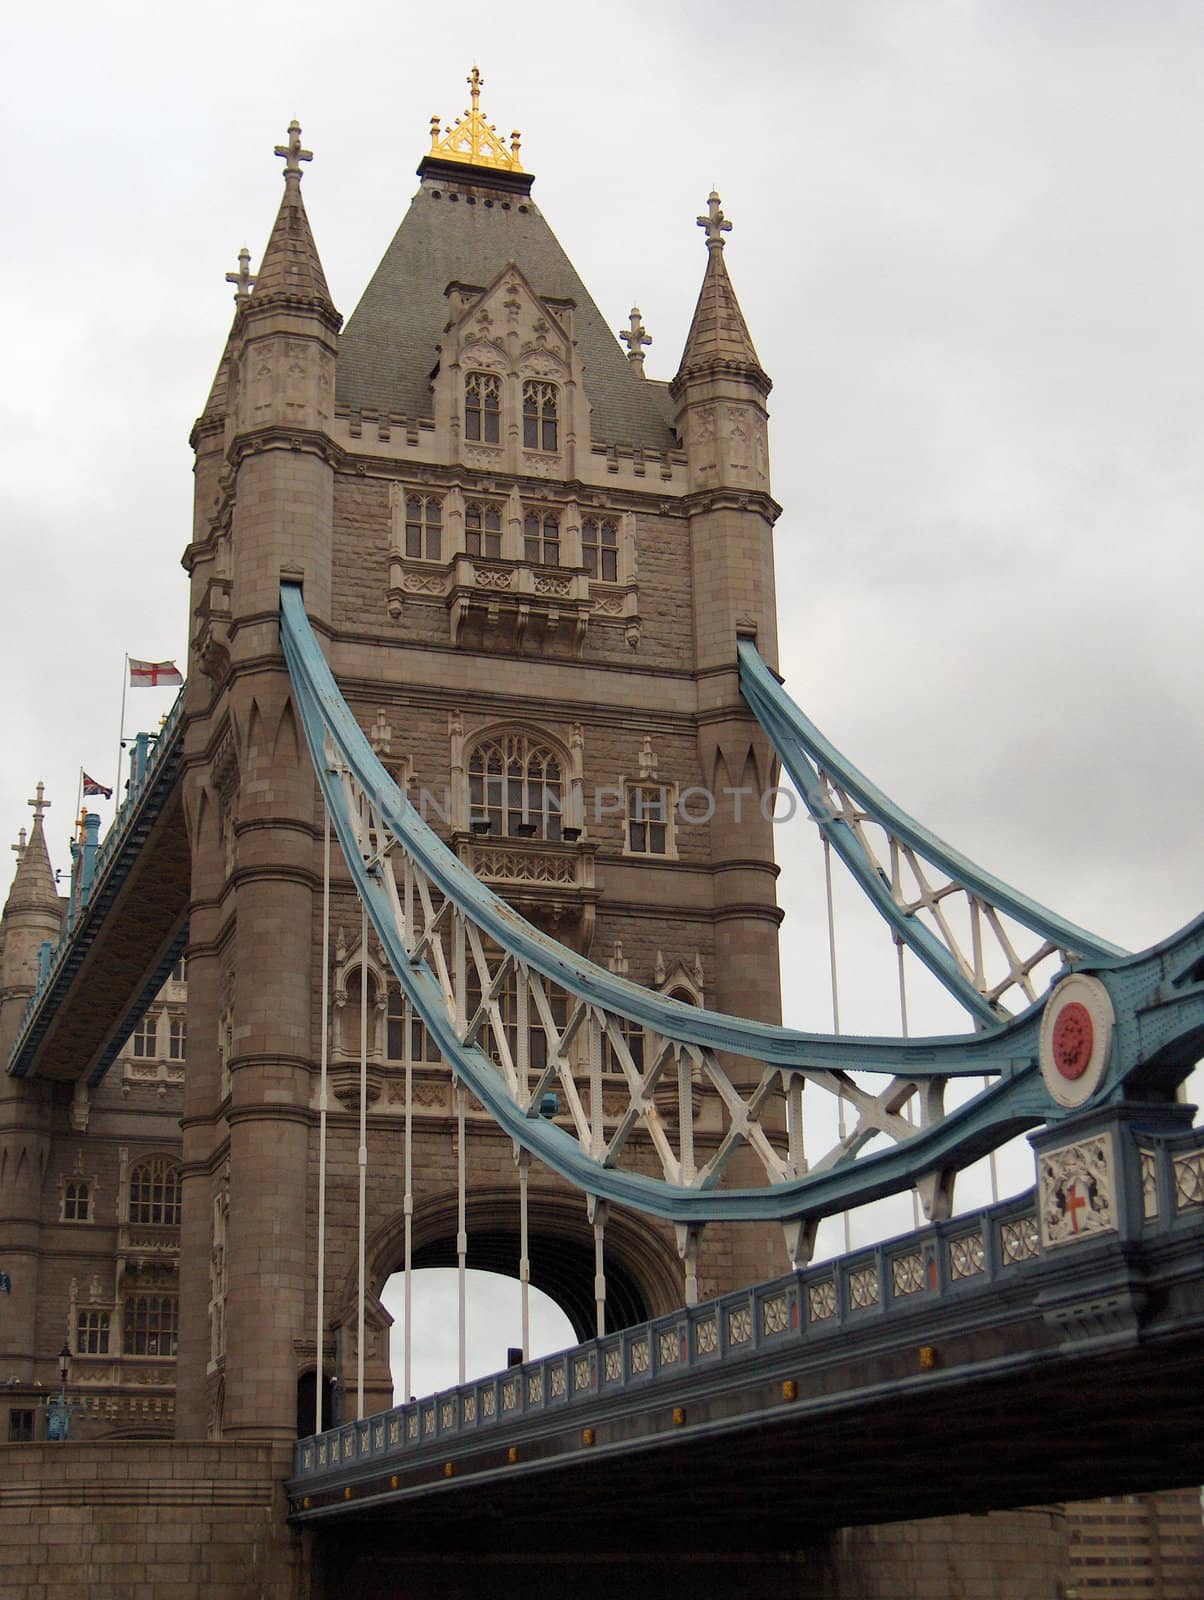 Tower Bridge, a landmark in London, England.